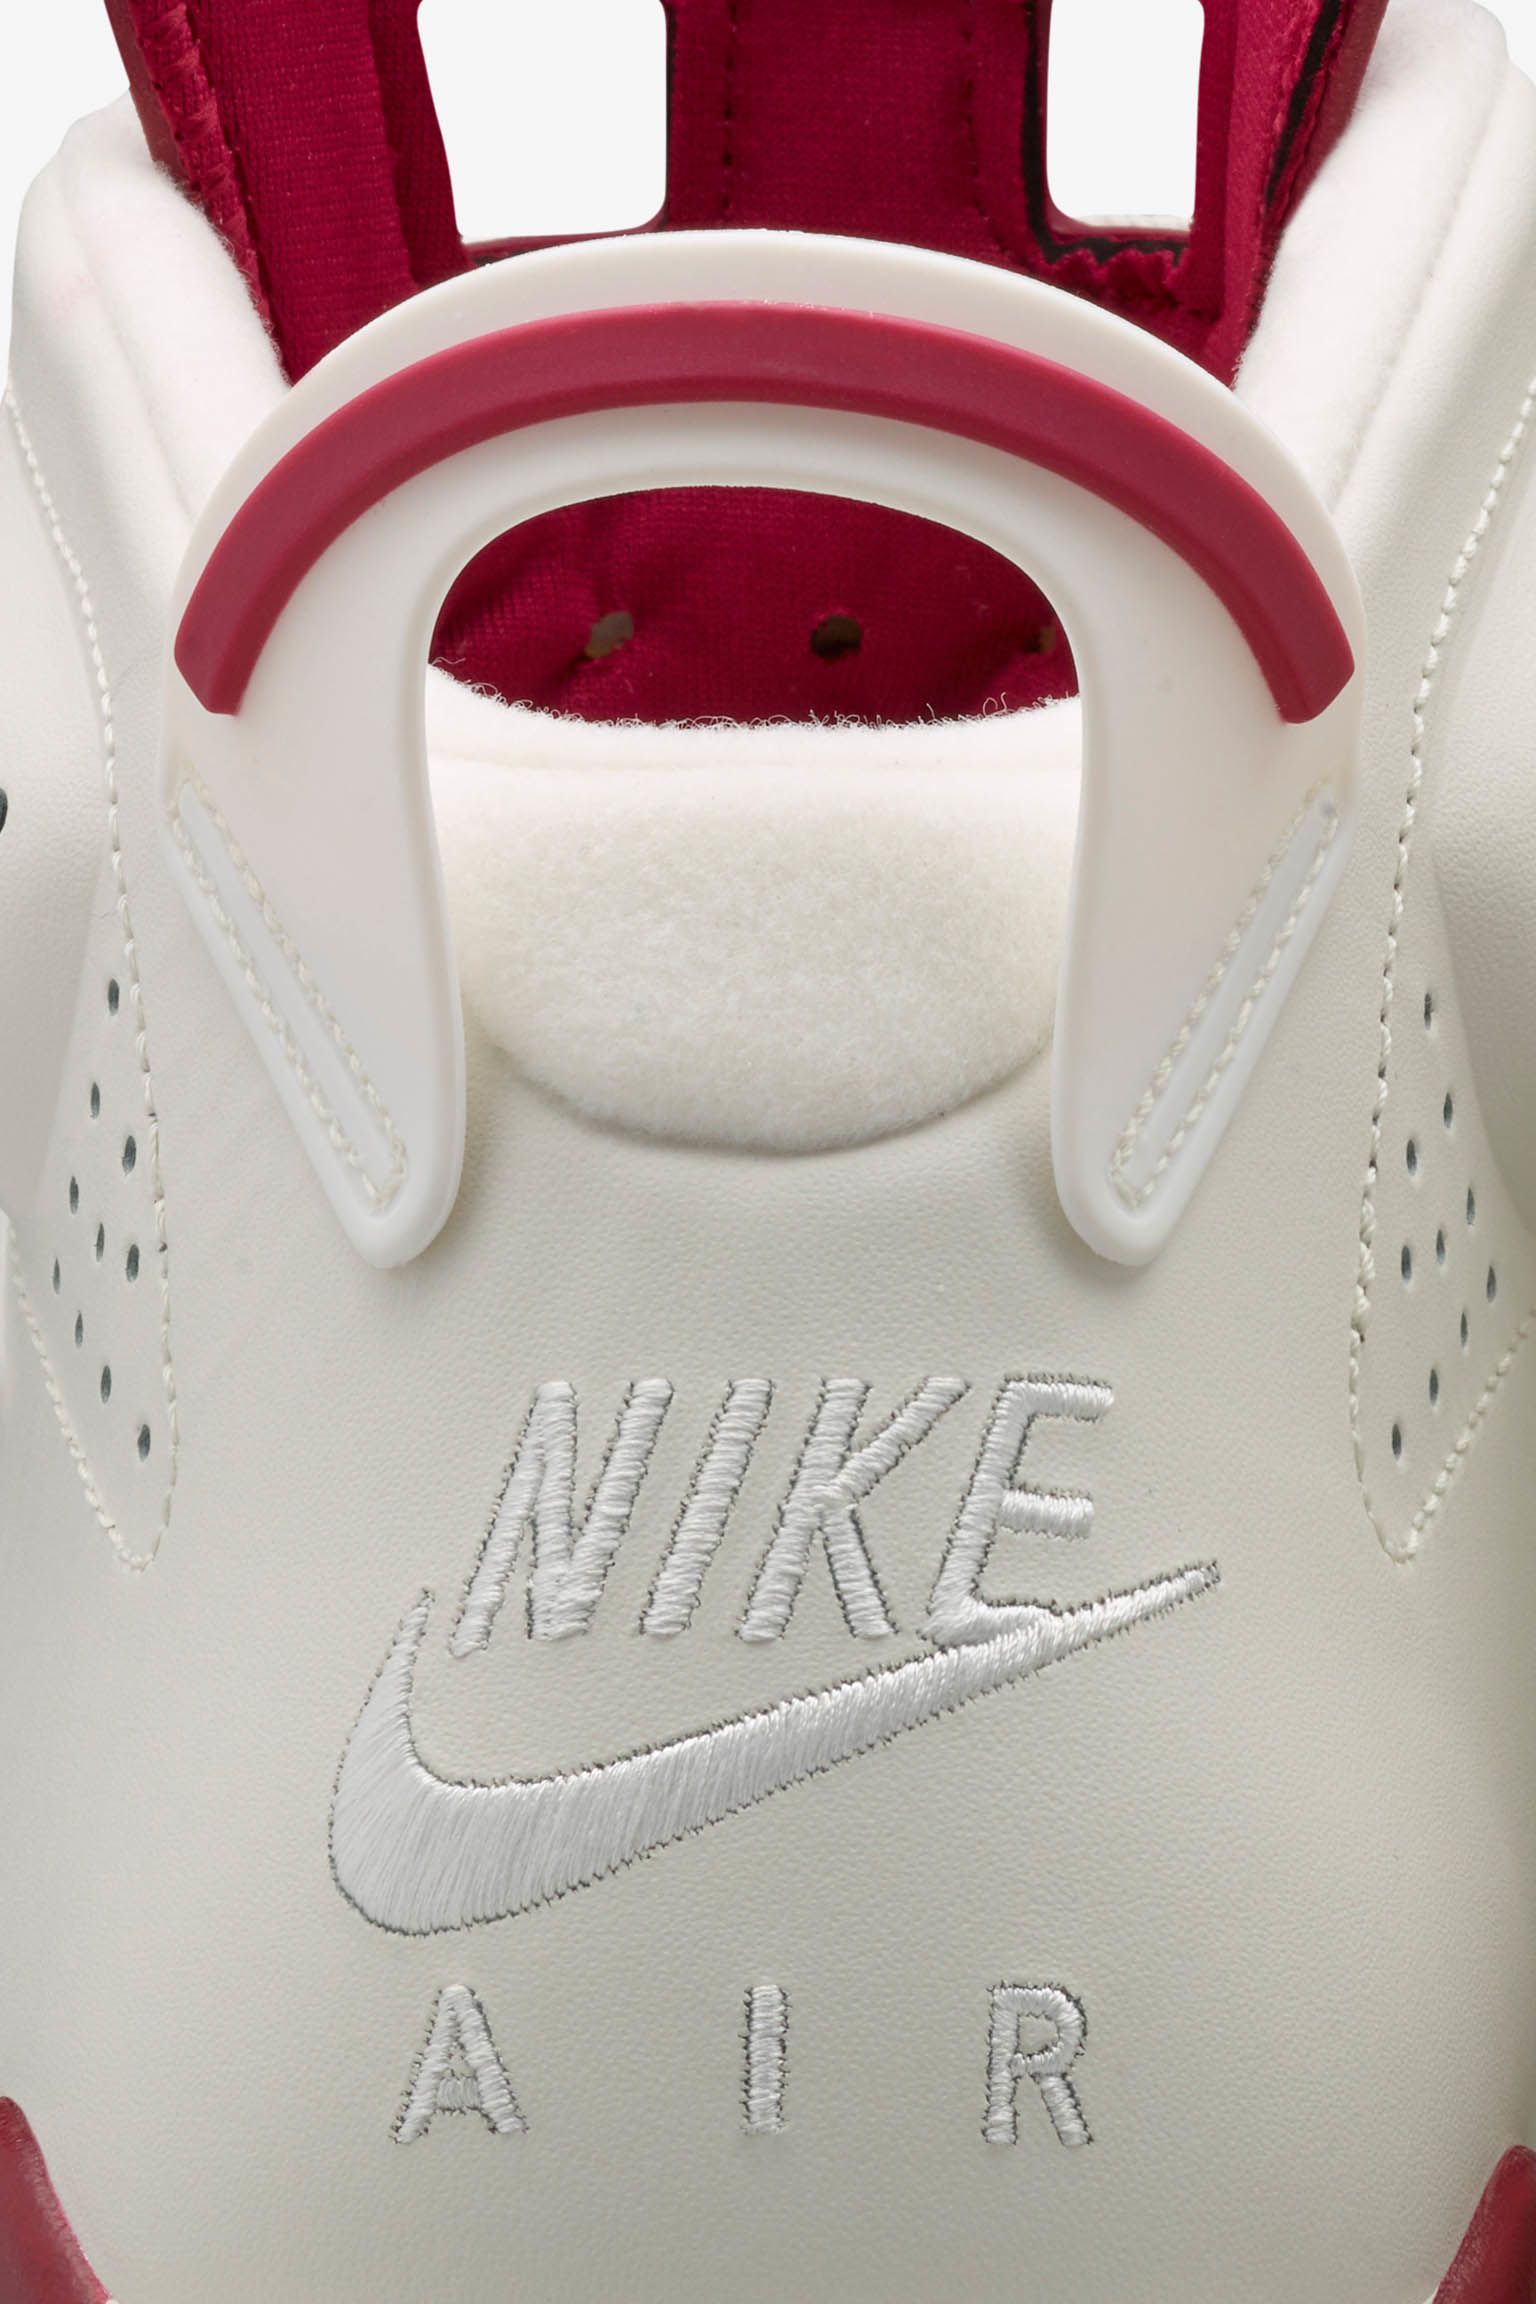 Geología primero añadir Air Jordan 6 Retro 'Maroon' Release Date. Nike SNKRS